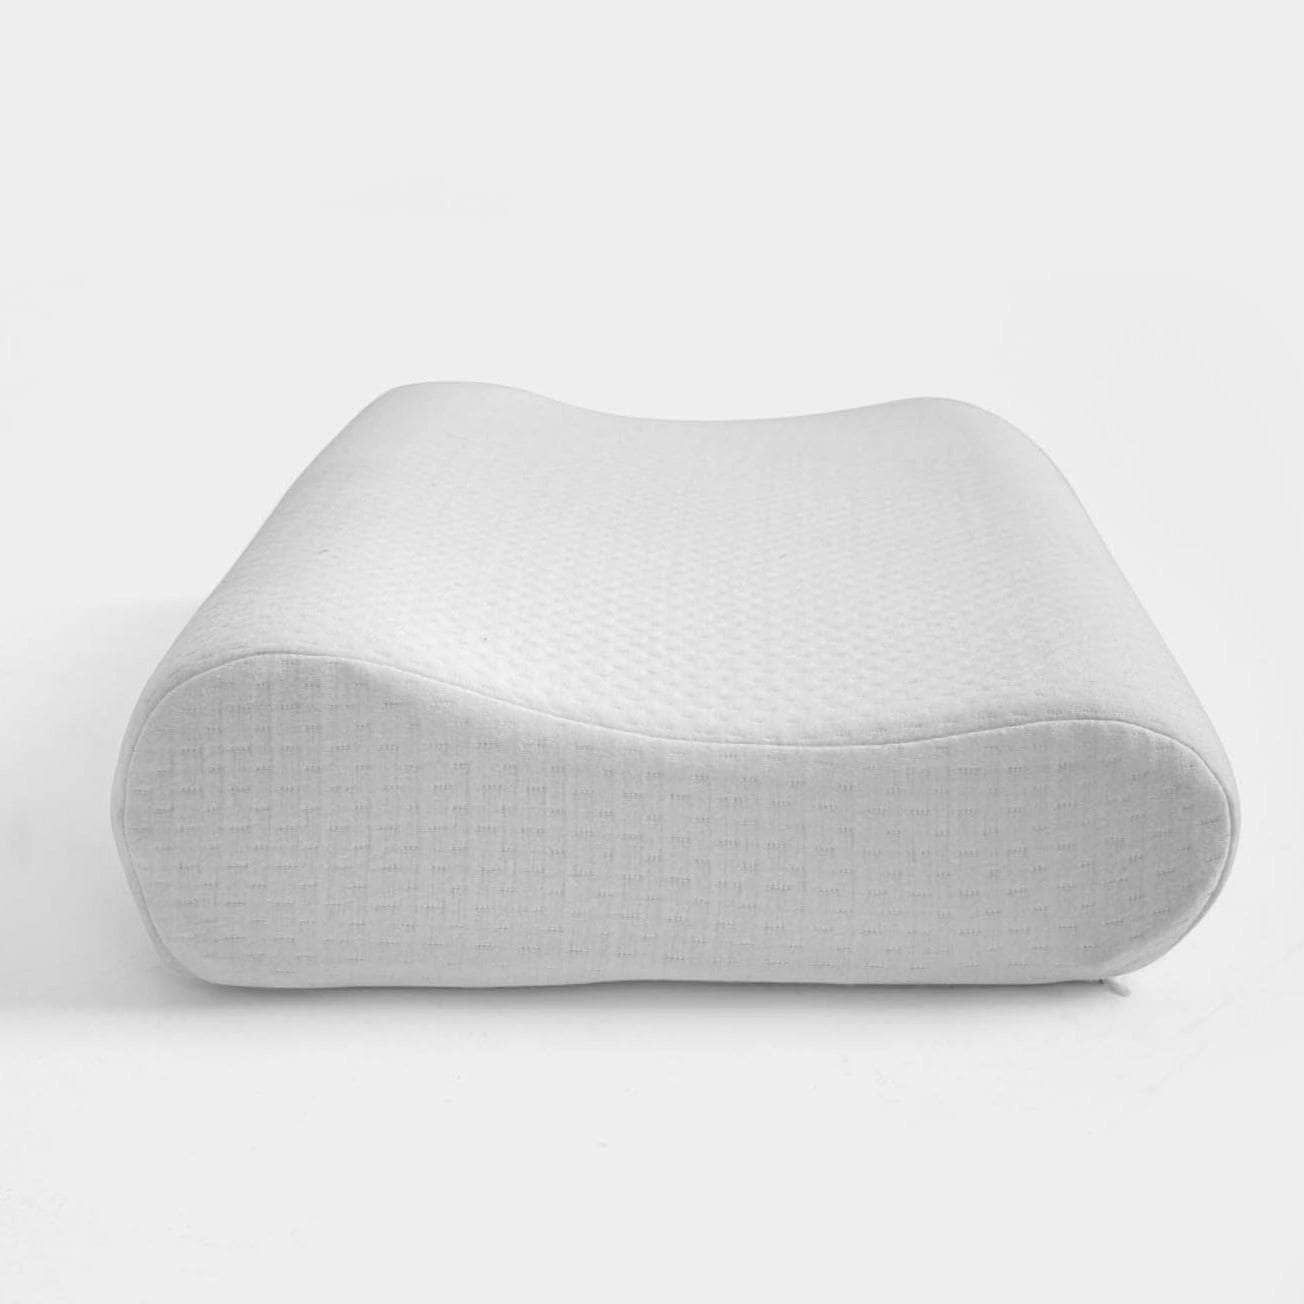 Penguin Group Pillows Contour Memory Foam Pillow